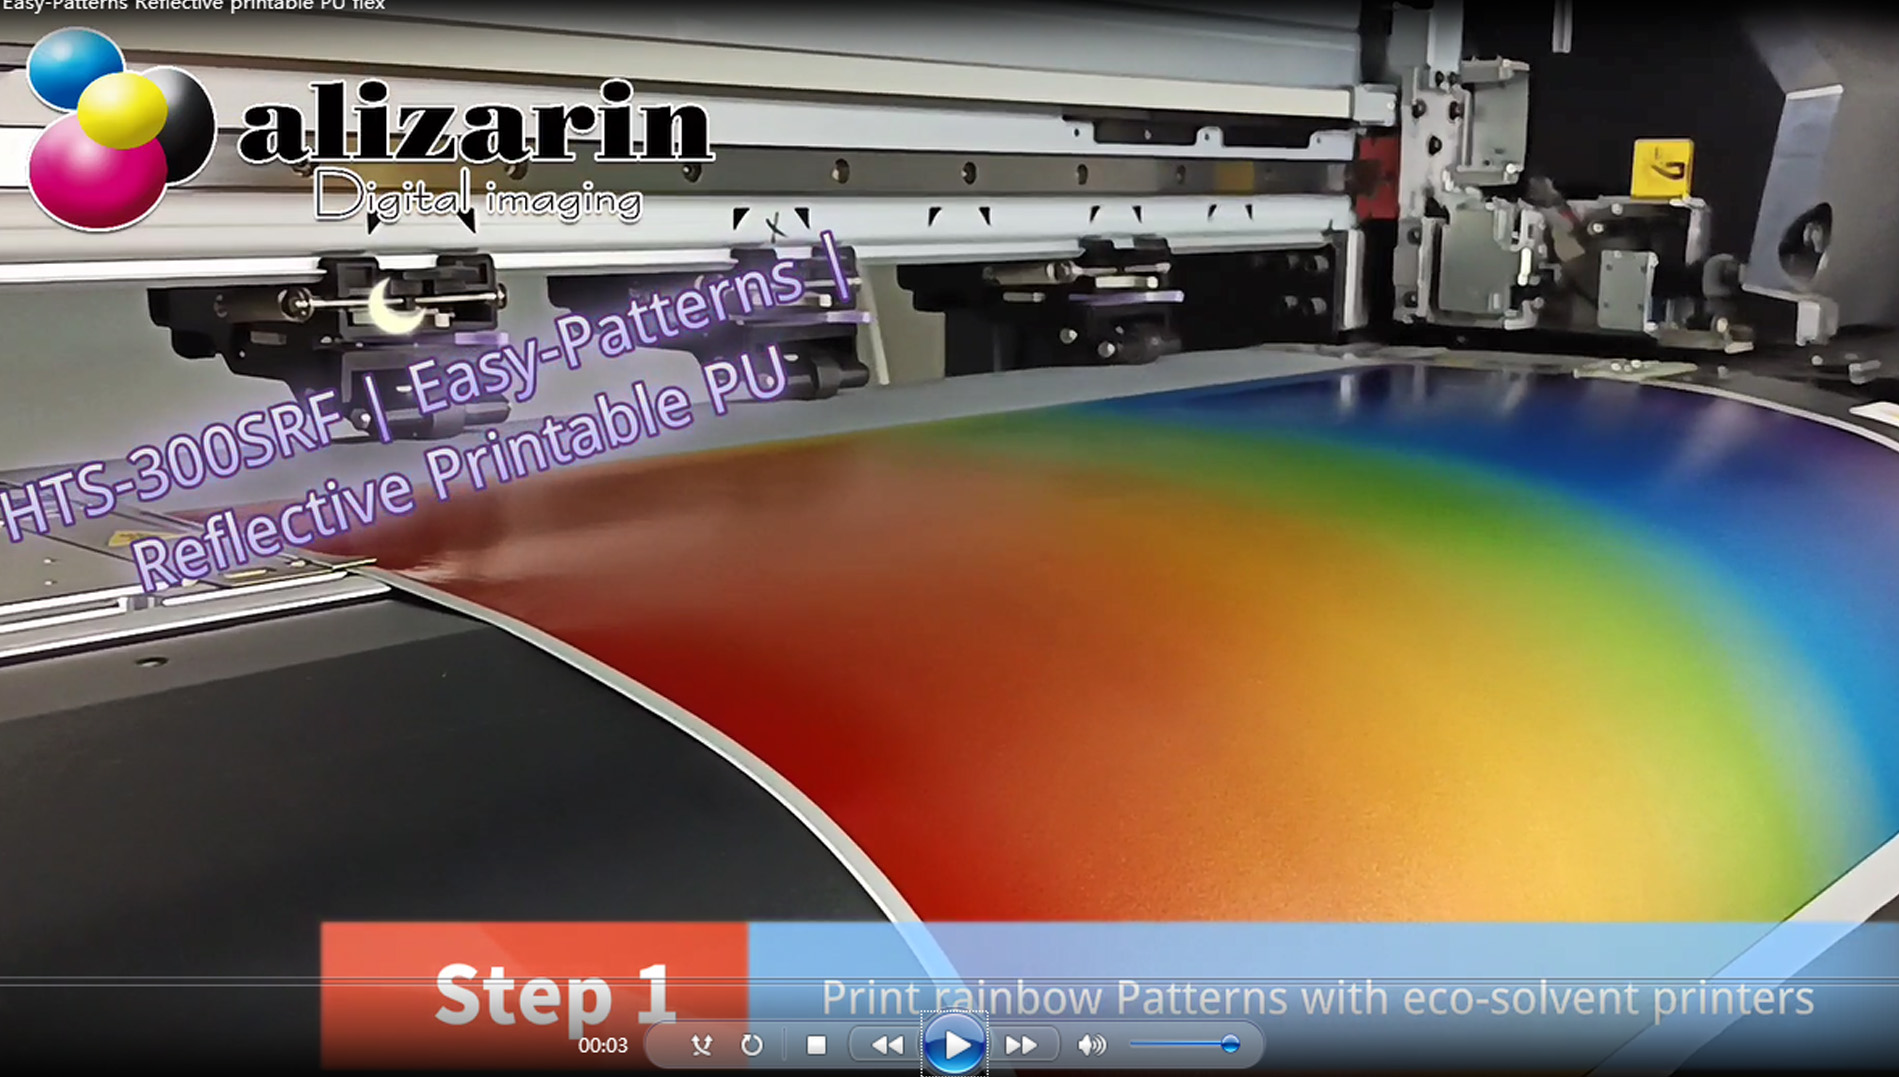 Easy-Patterns | HTS-300SRF Printable reflective | AlizarinChina.com